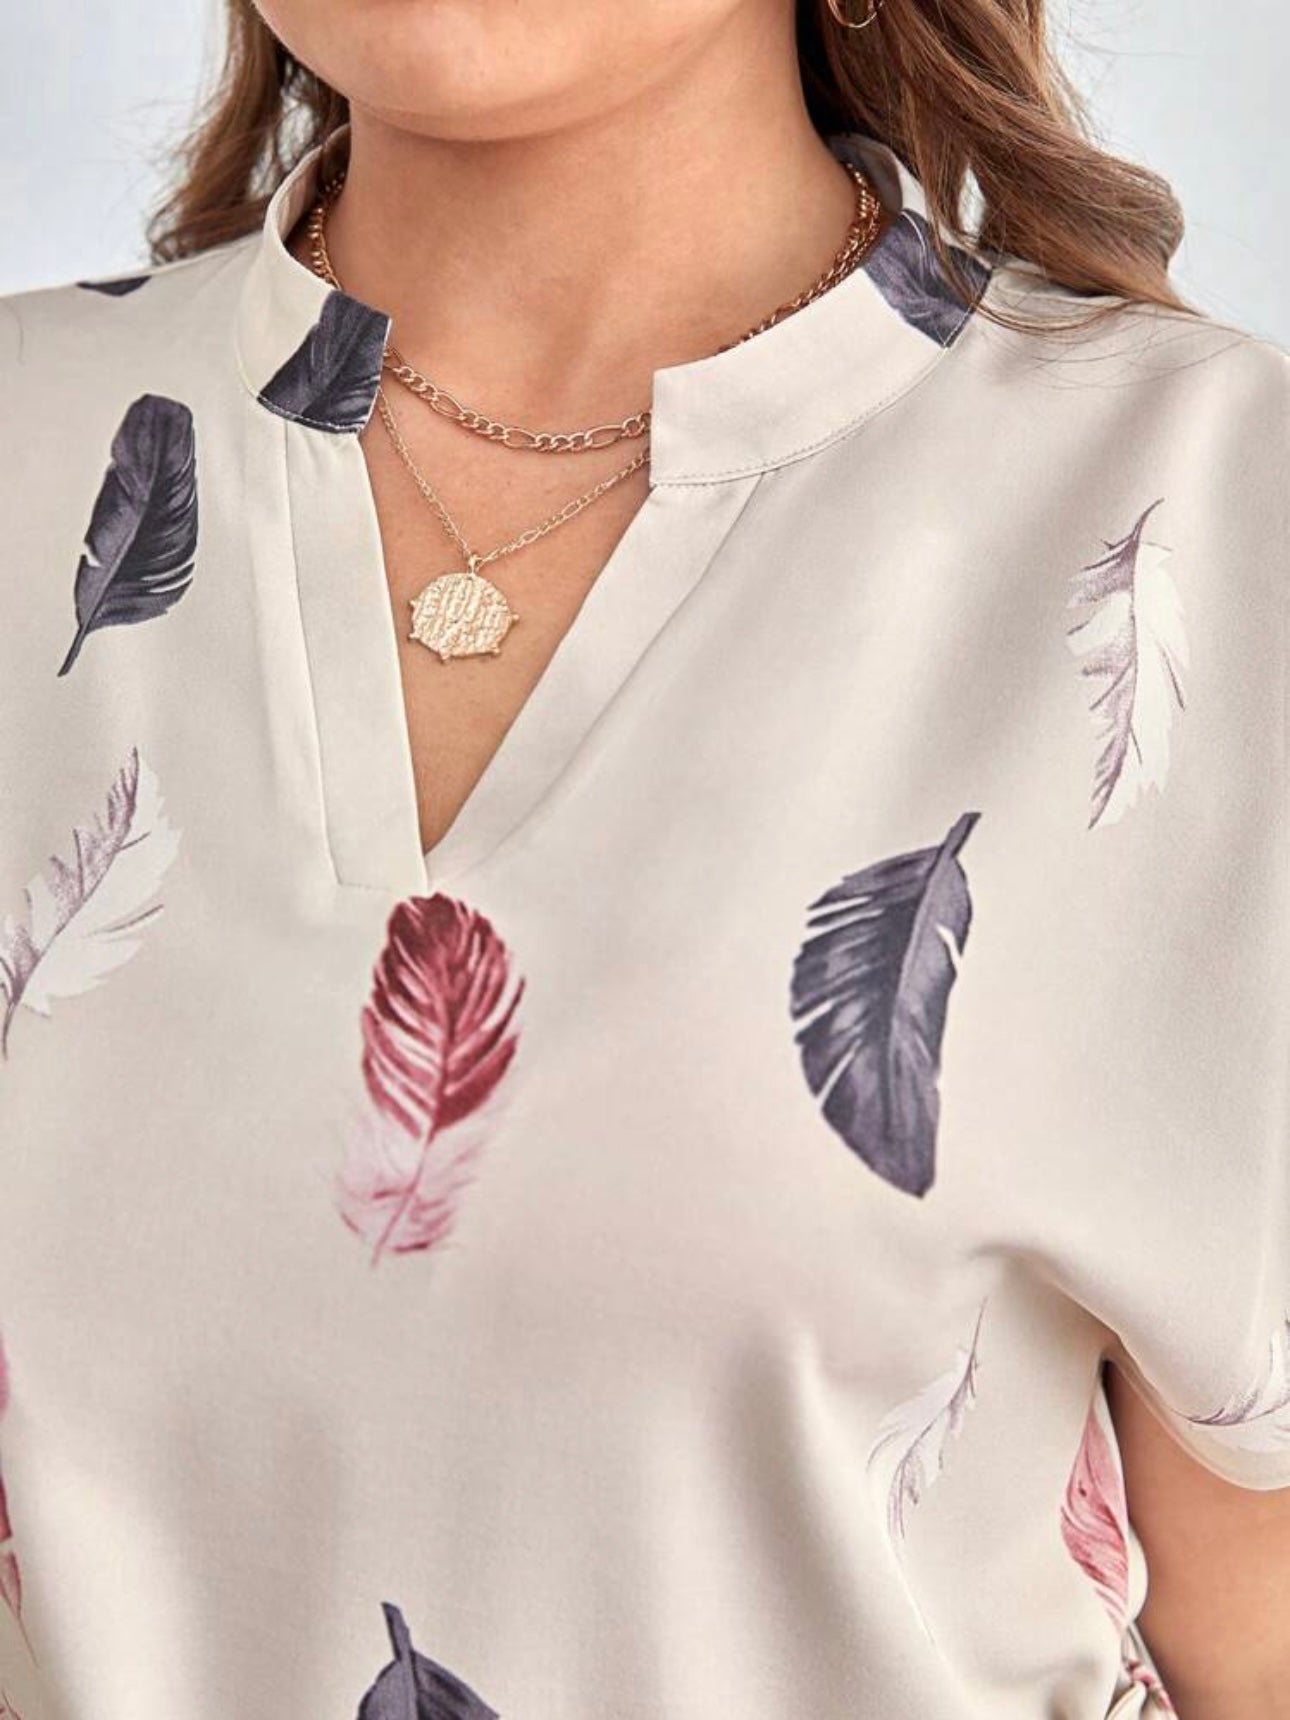 【L-3XL】 Plant Leaf Pattern Batwing Sleeve Self Belt Plus Size Shirt Dress